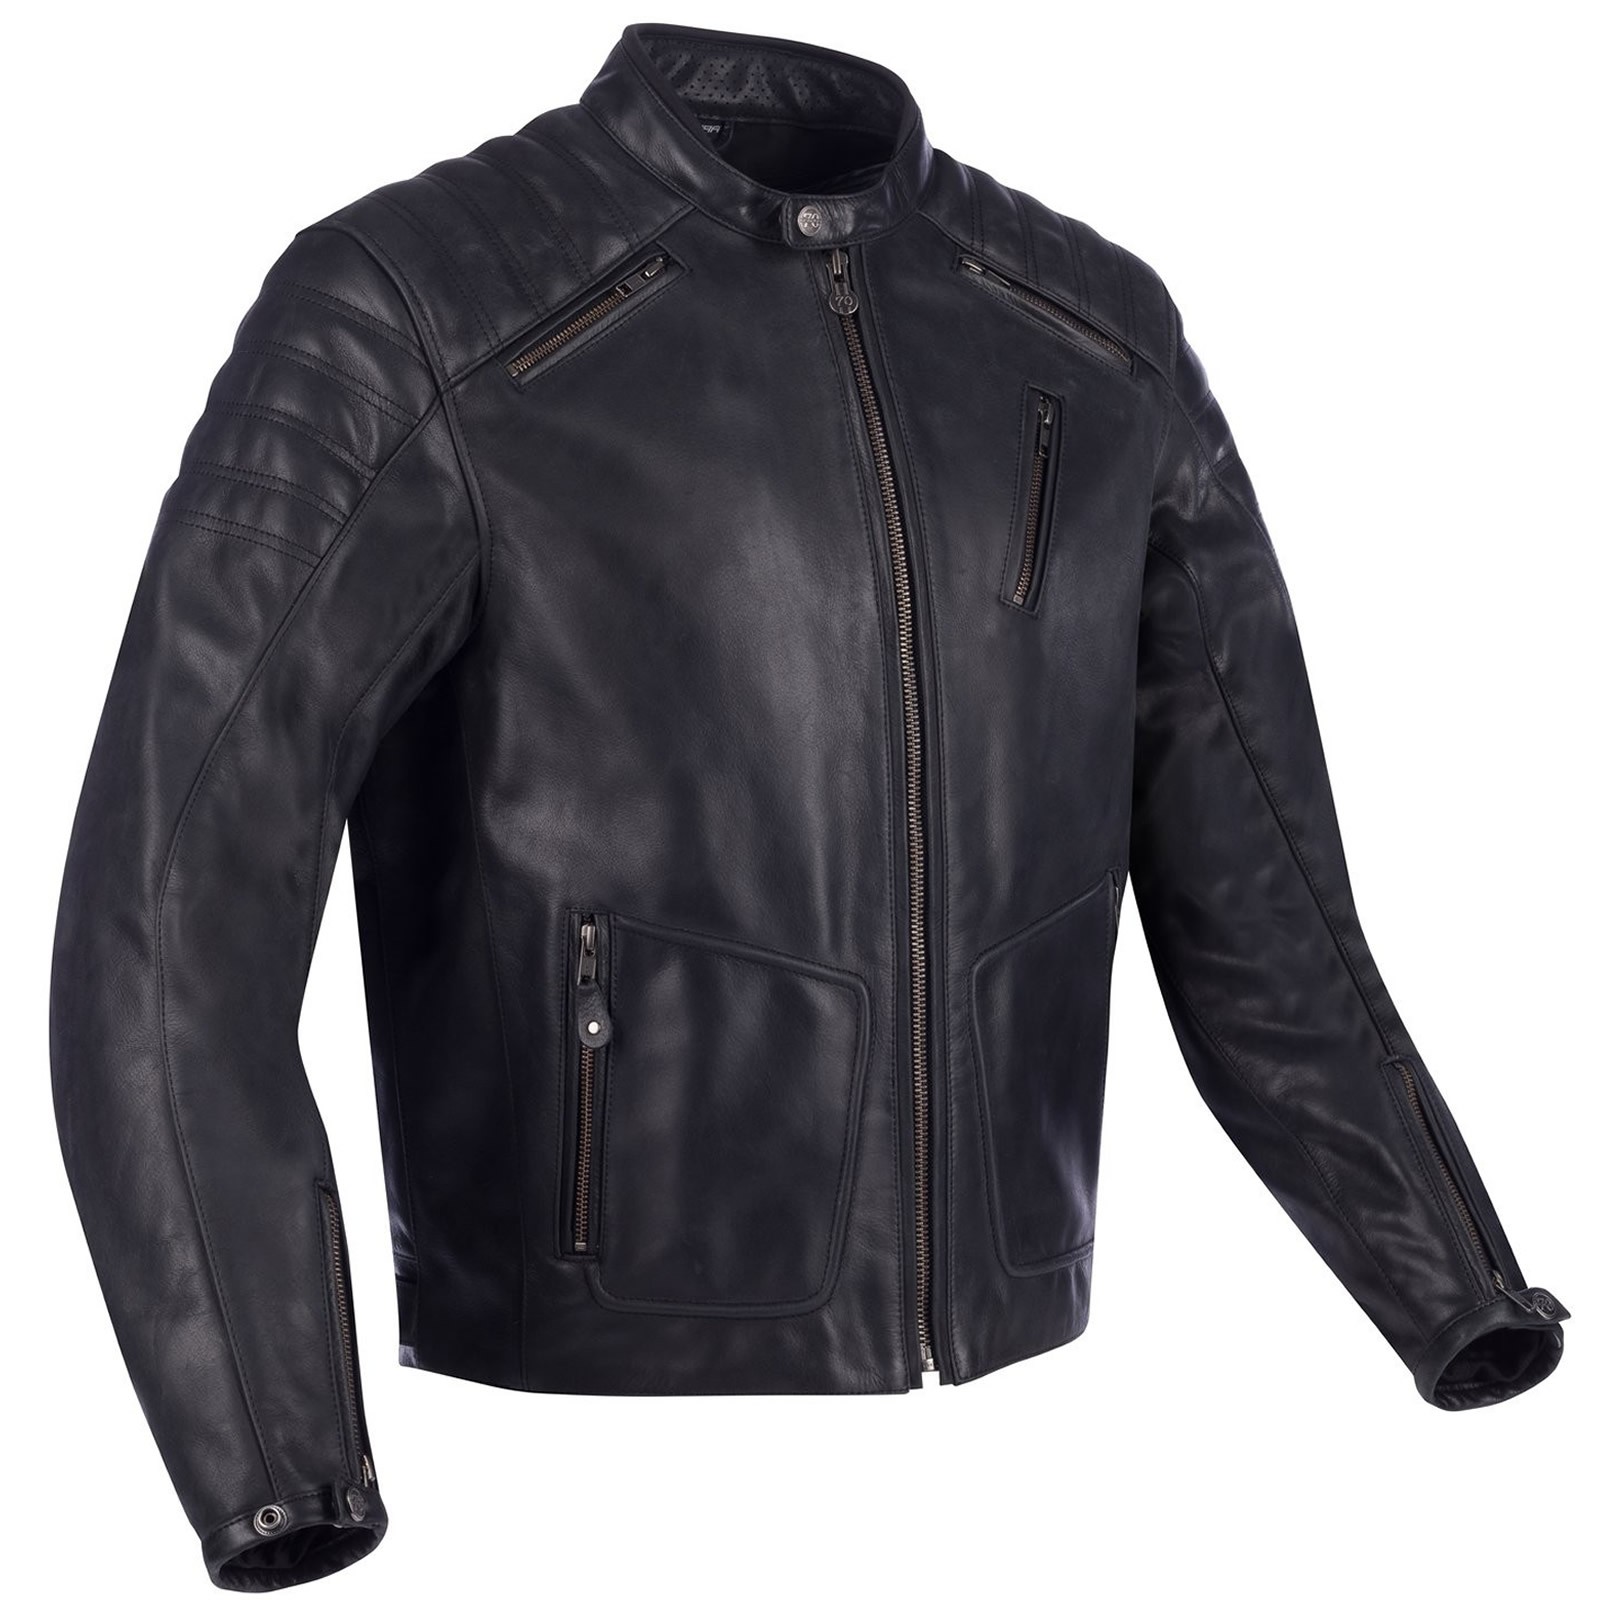 Image of Segura Angus Jacket Black Size S ID 3660815166239